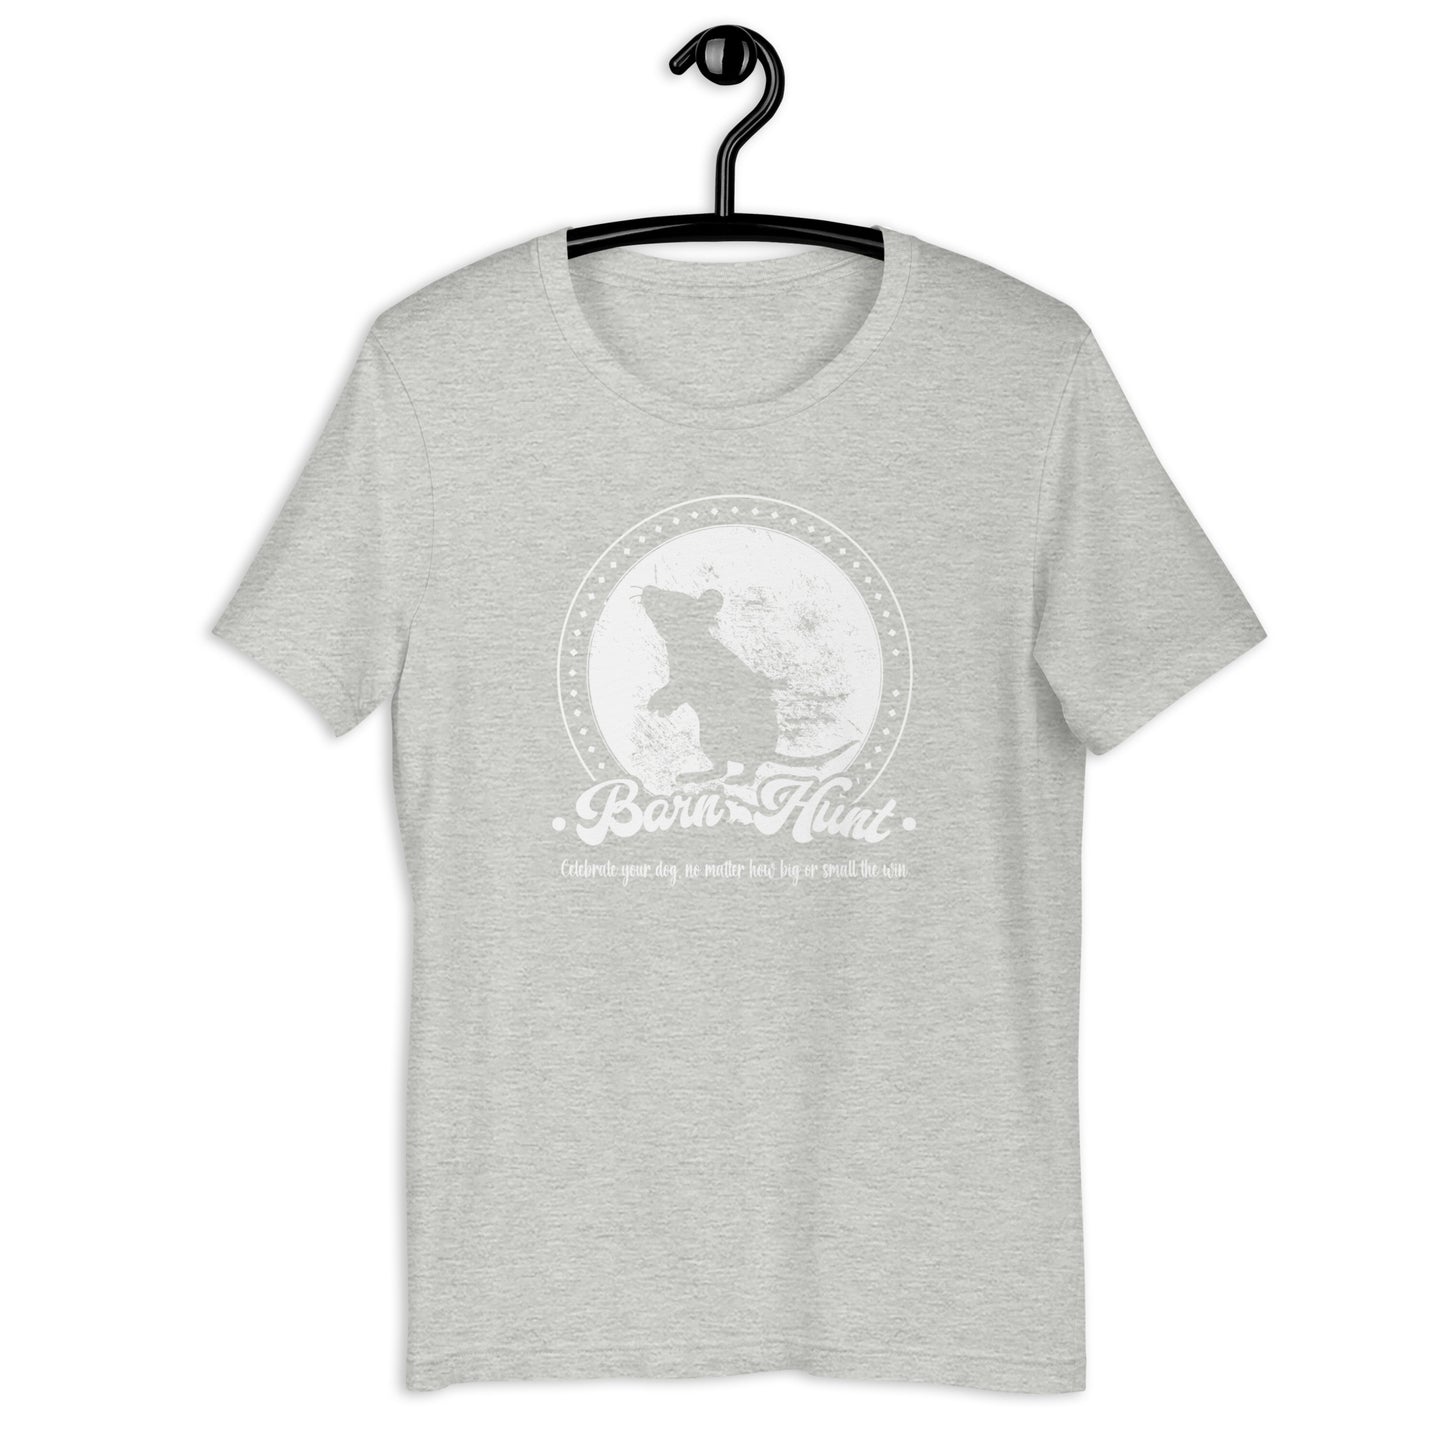 BARN HUNT - Celebrate your dog - Unisex t-shirt